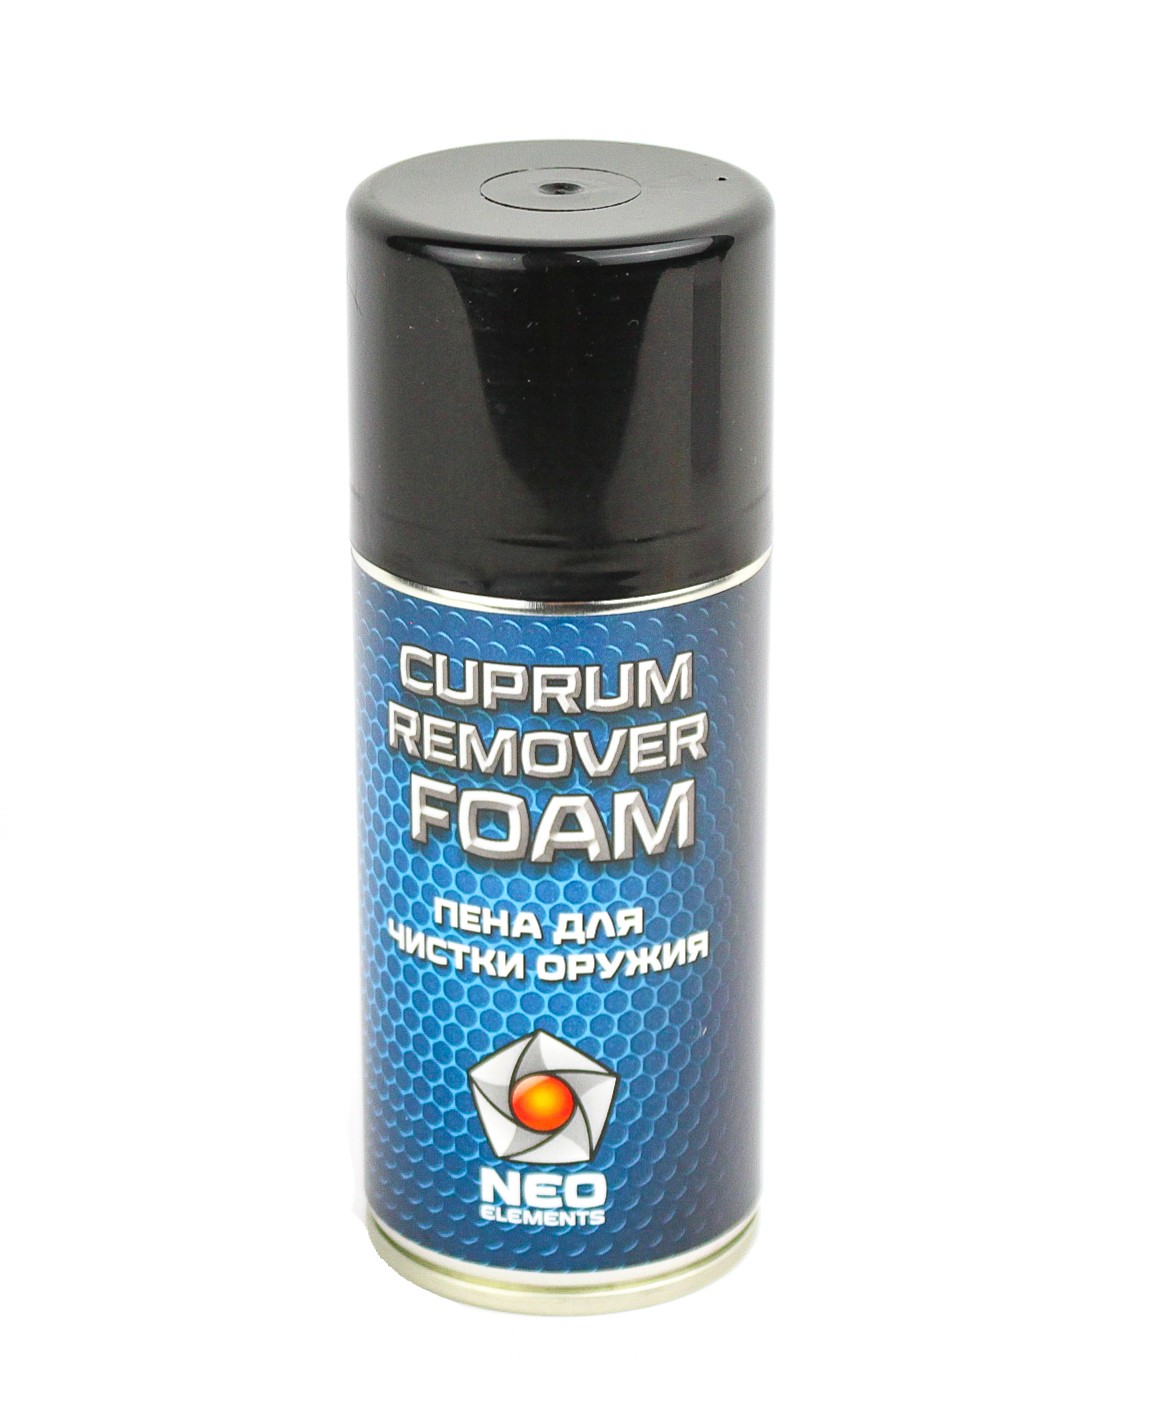 Пена Neo Elements Cuprum Remover Foam для чистки оружия 210мл